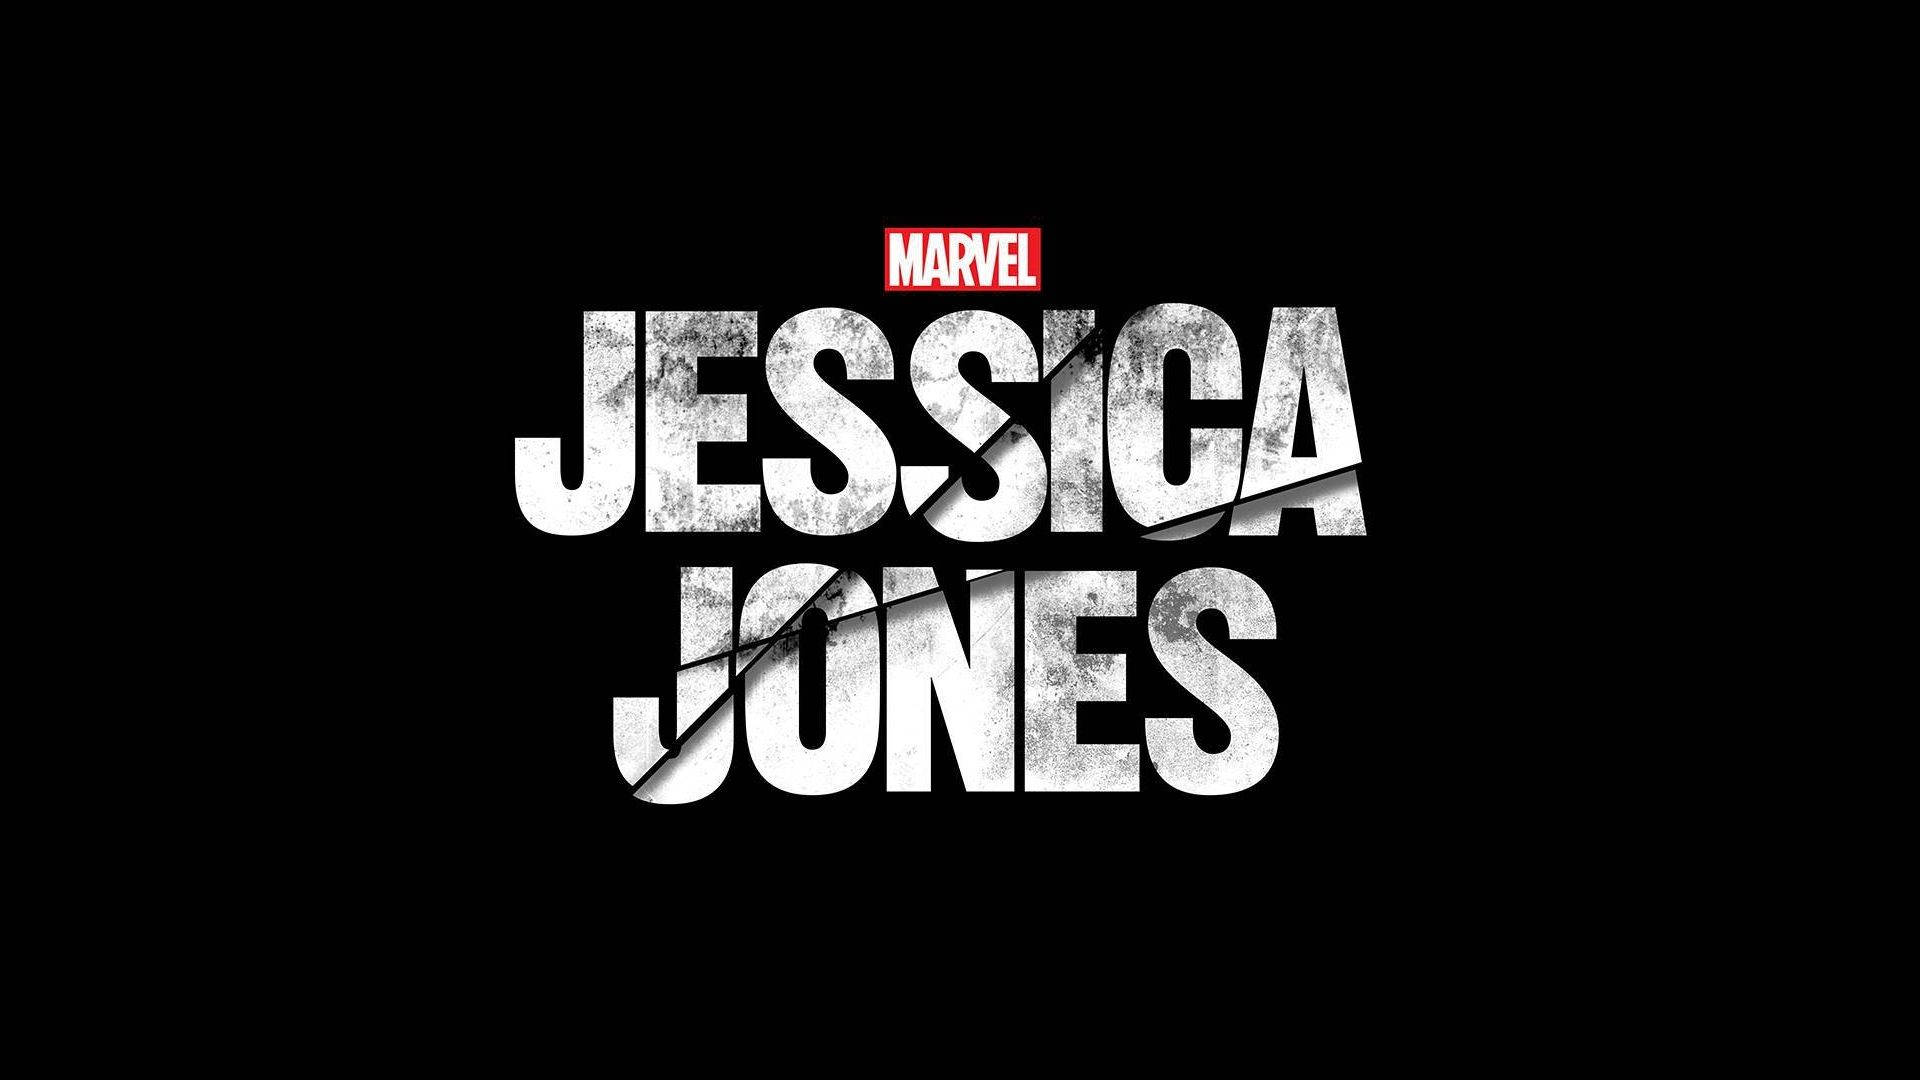 Marvel Jessica Jones Poster Background